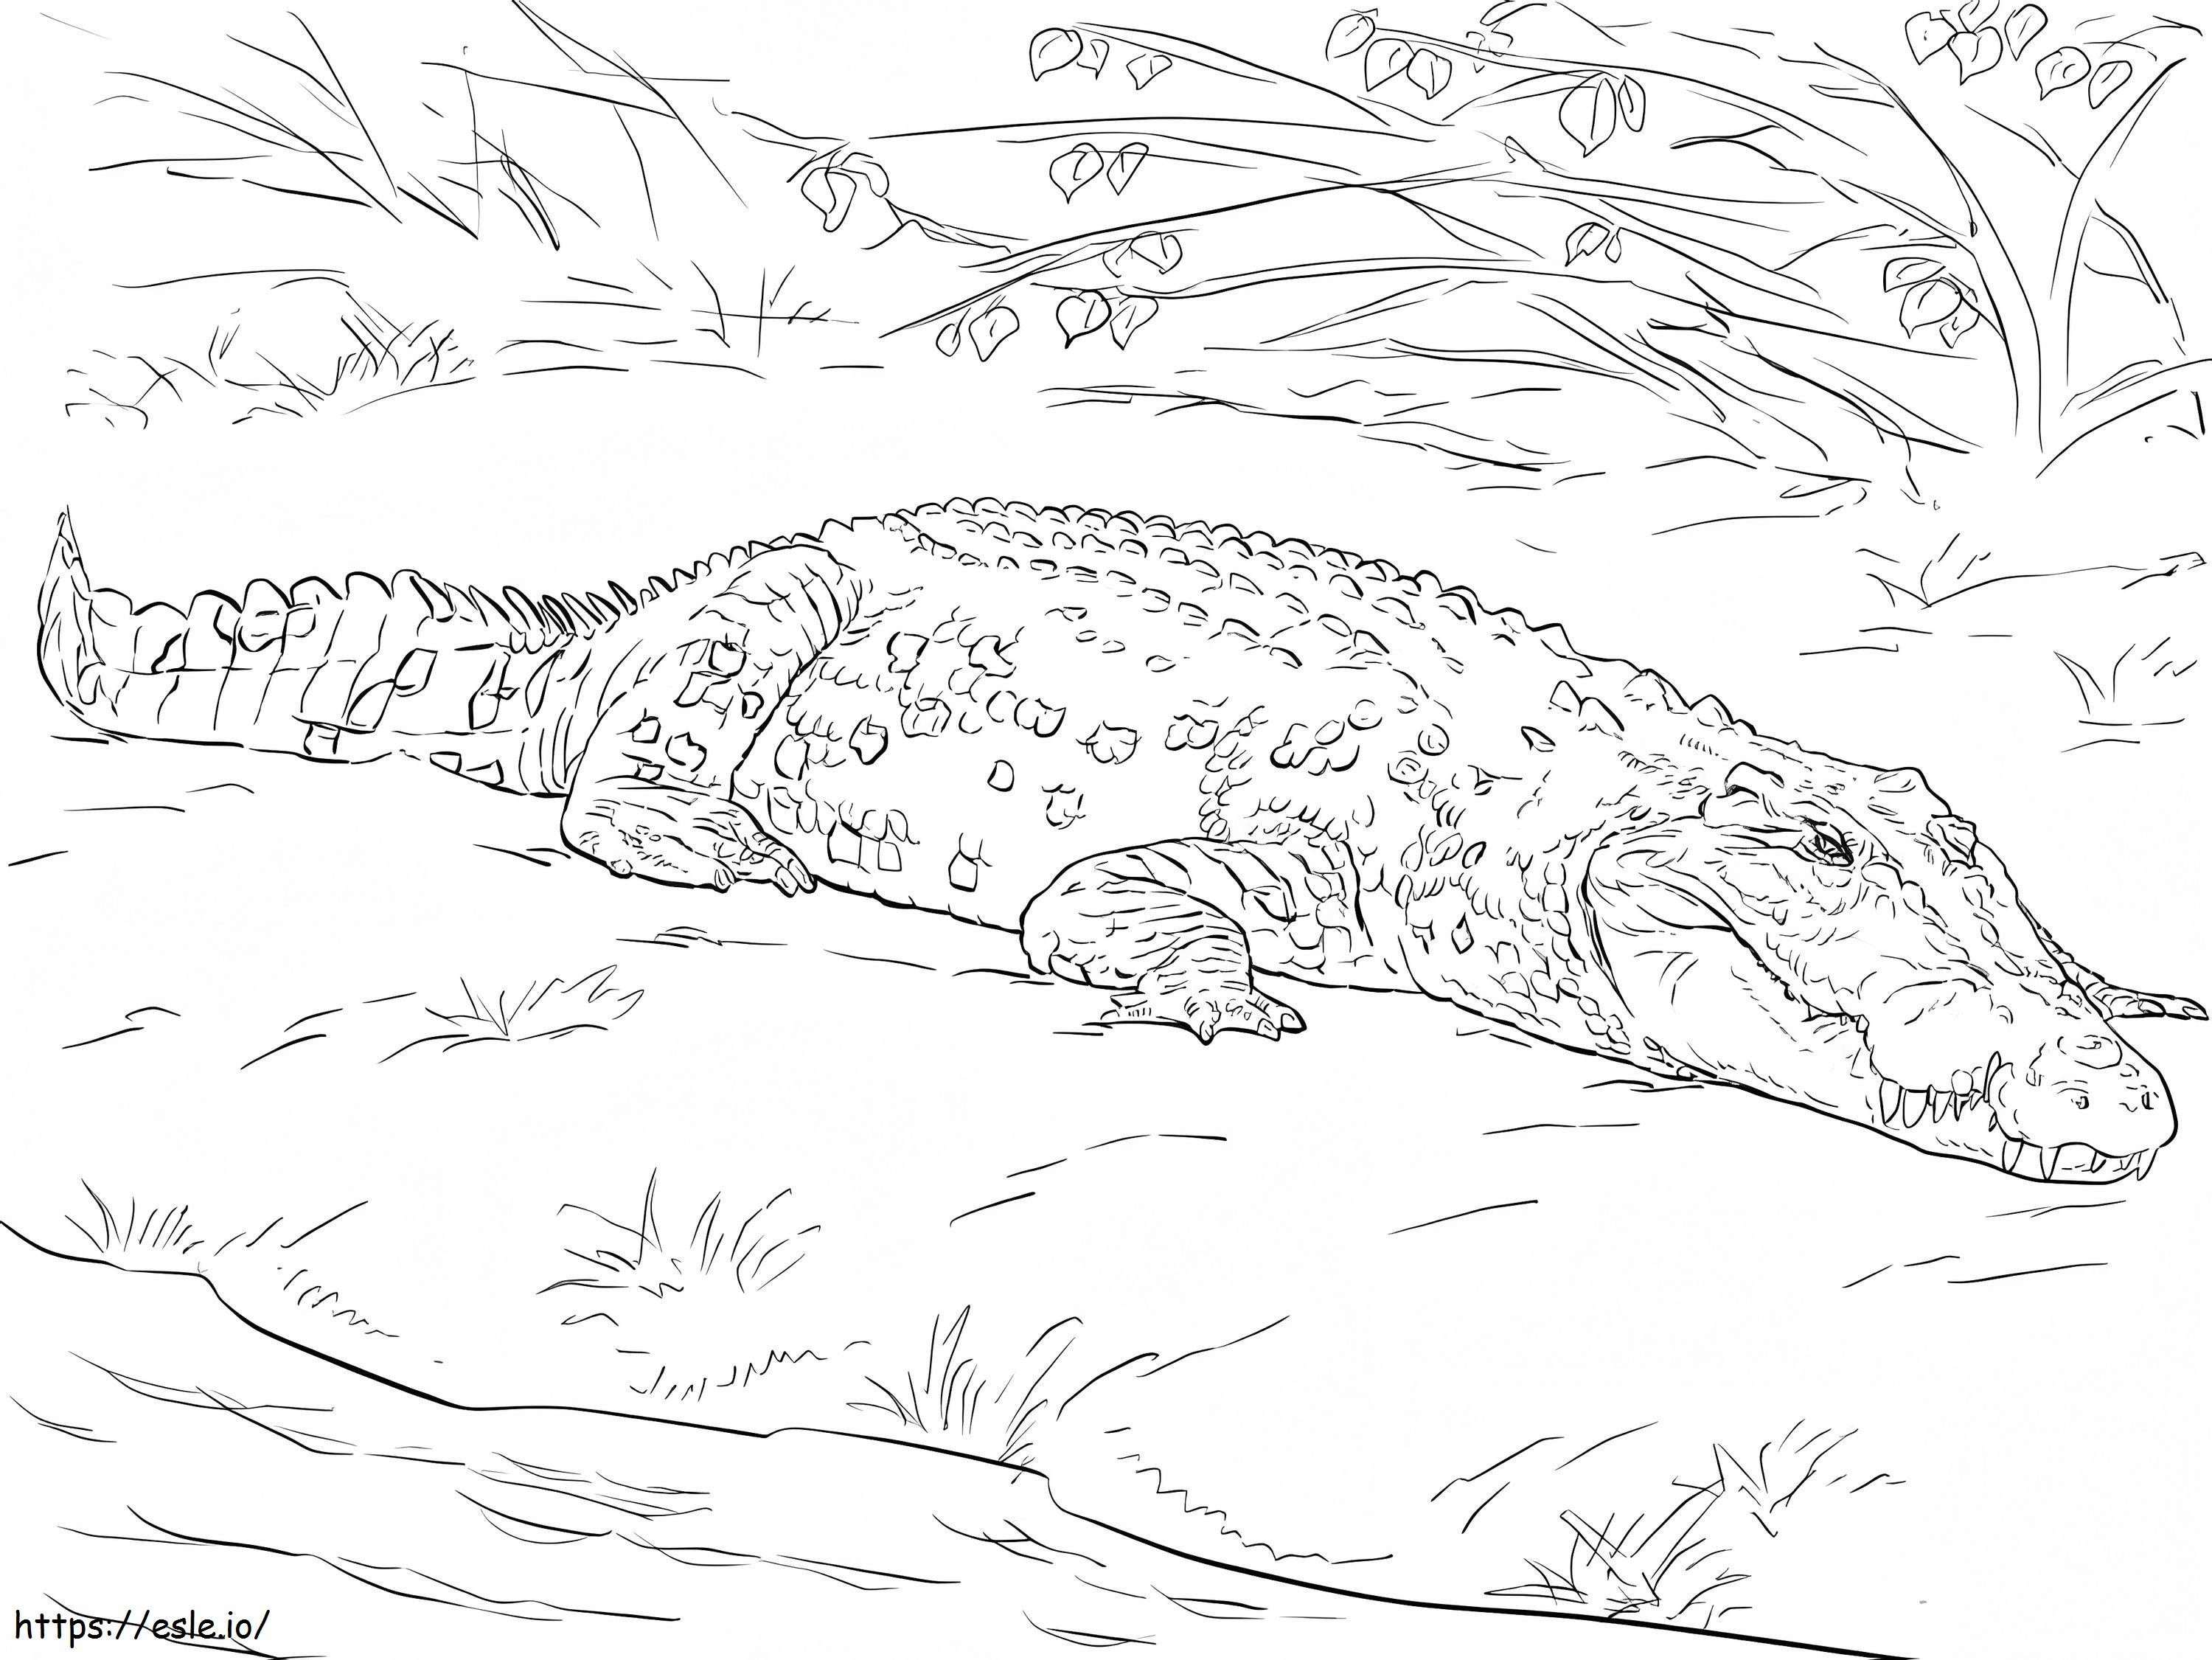 Saltwater Crocodile coloring page